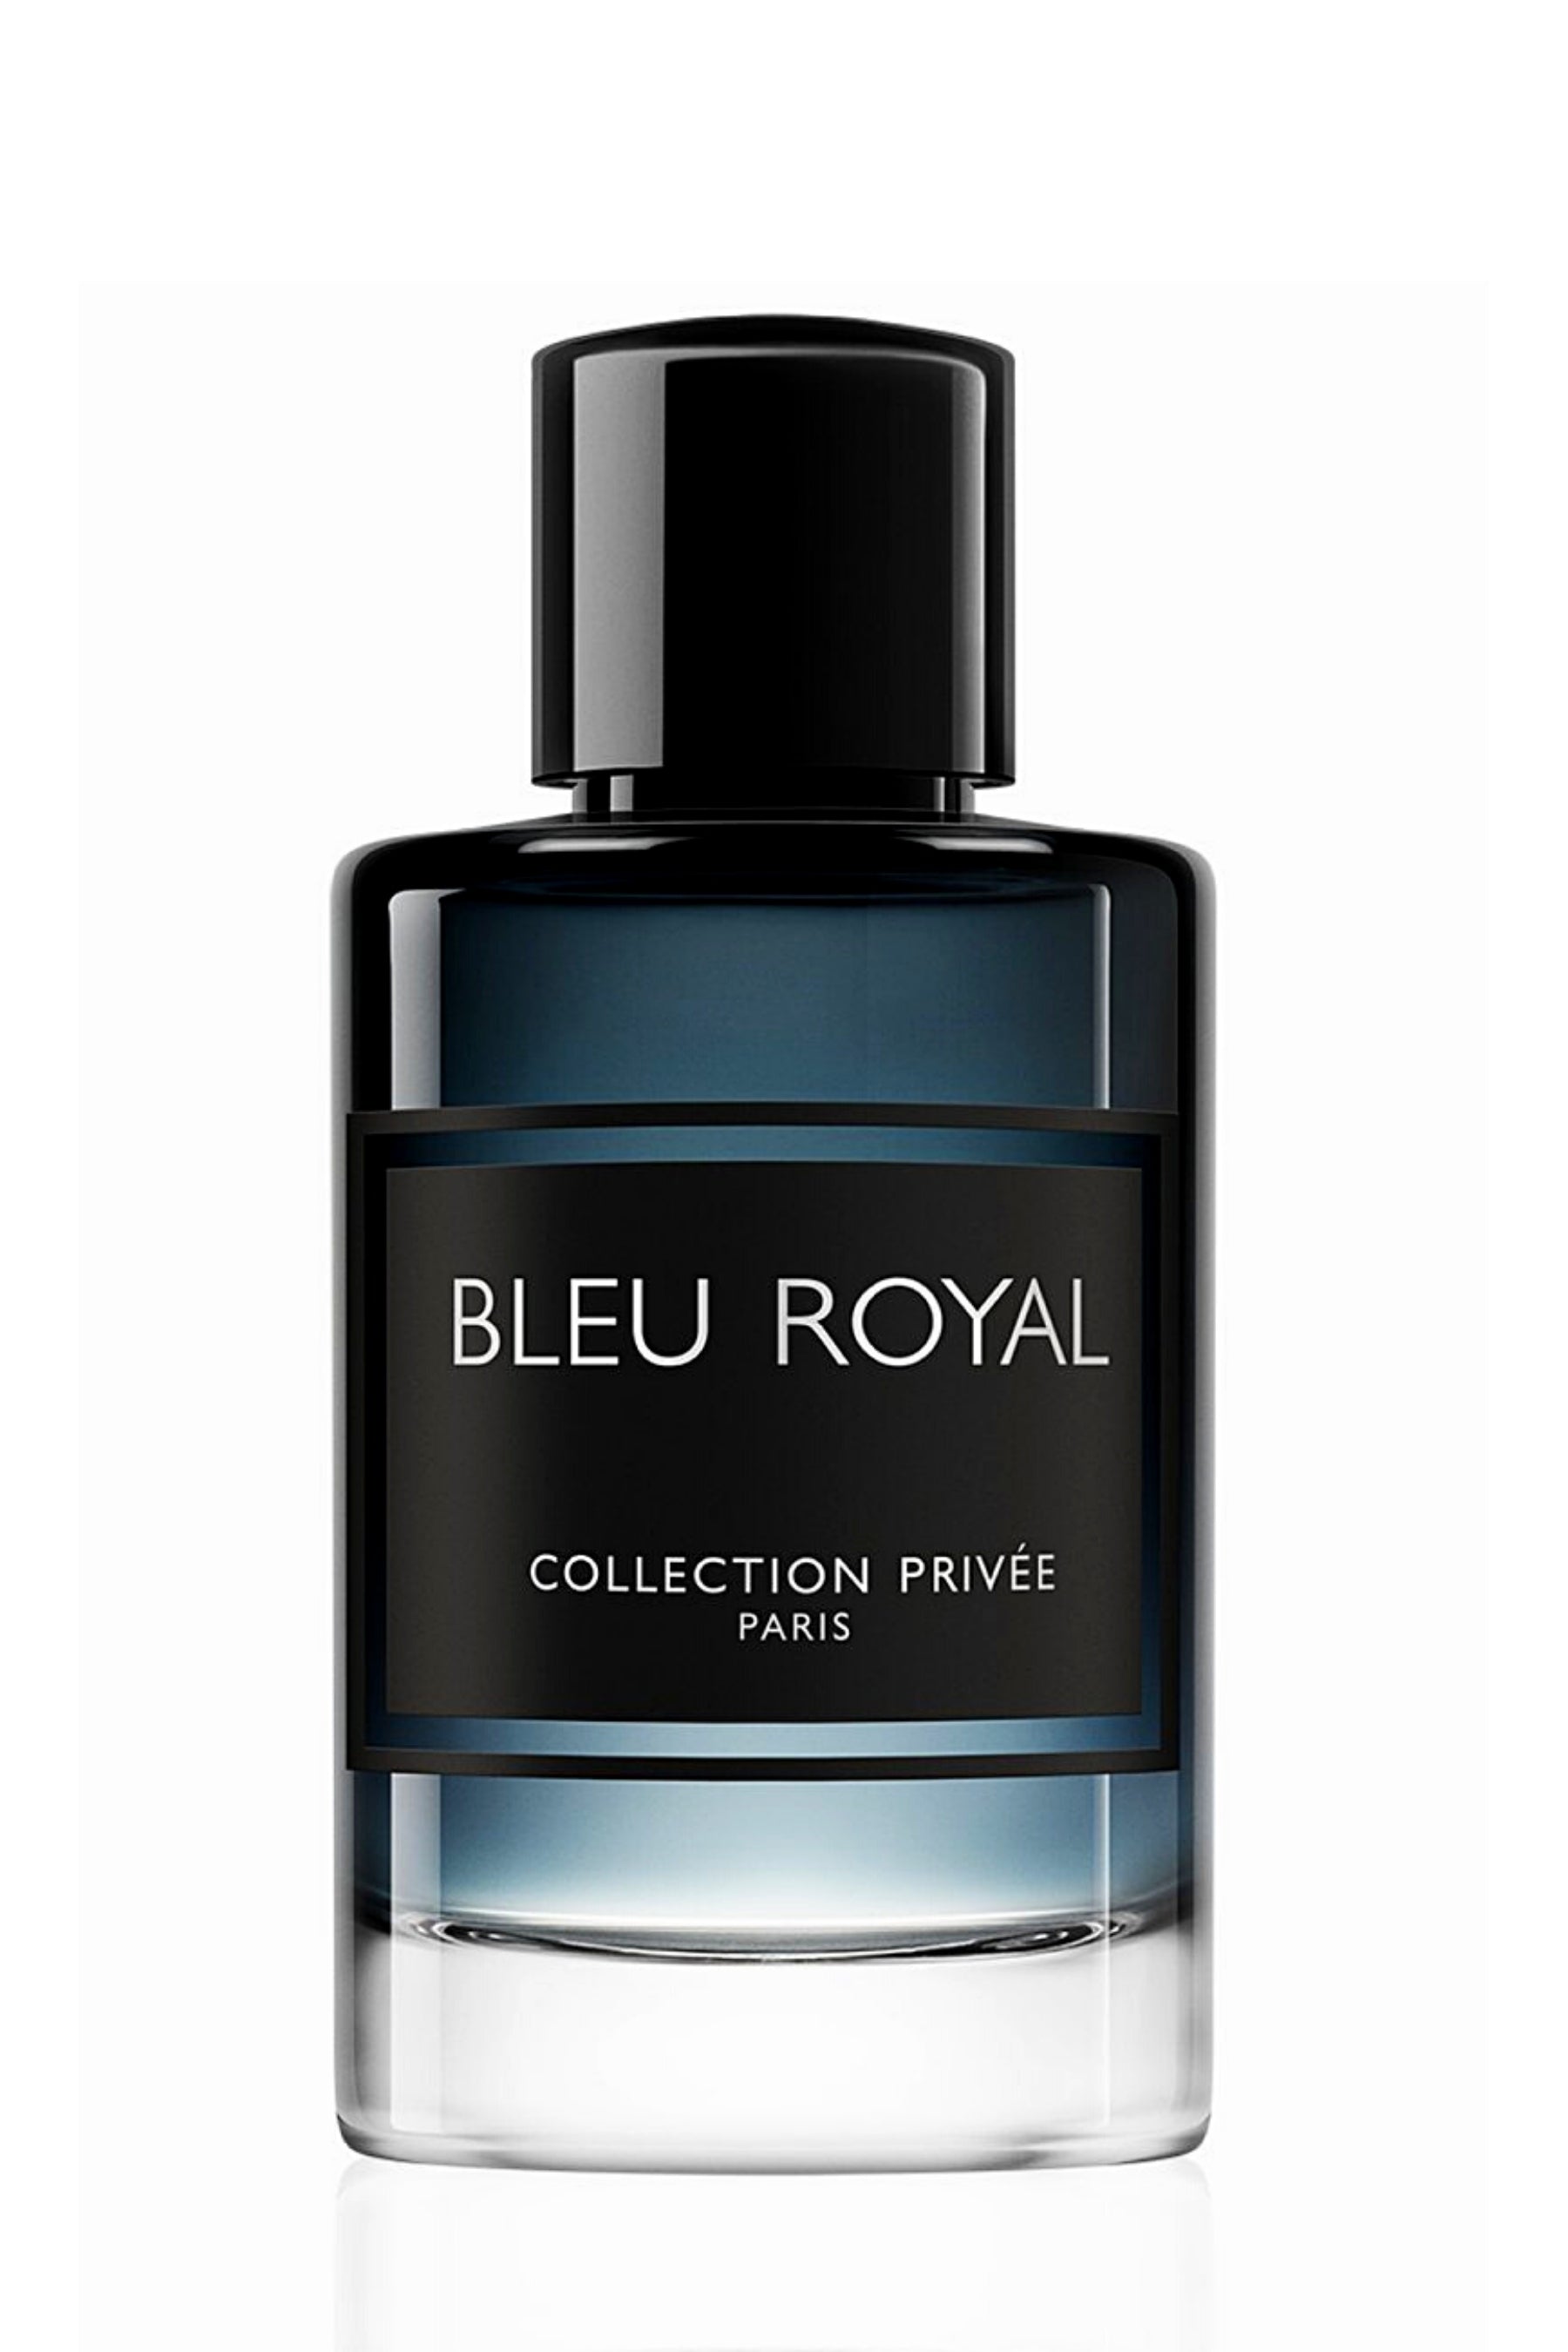 Collection Privee Geparlys Bleu Royal Men 3.4 oz-100 ml Eau de Parfum Spray